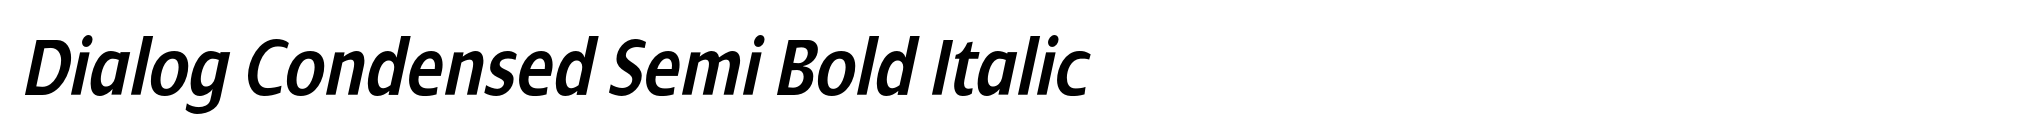 Dialog Condensed Semi Bold Italic image